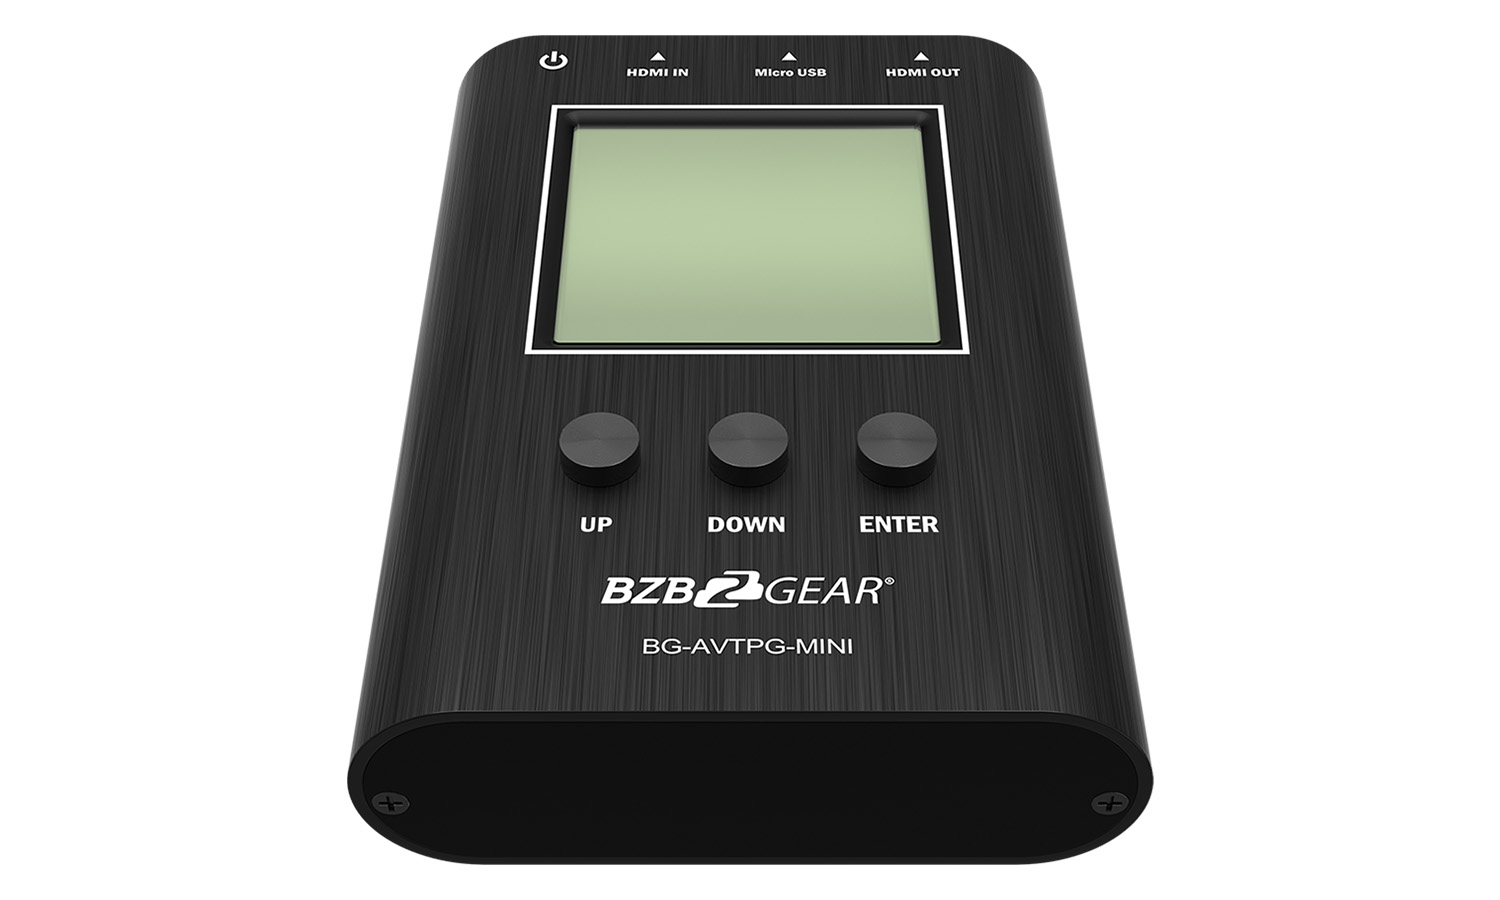 BG-AVTPG-MINI 1080P/4K UHD HDMI 2.0 18Gbps Portable Signal Test Generator and Analyzer by BZBGEAR